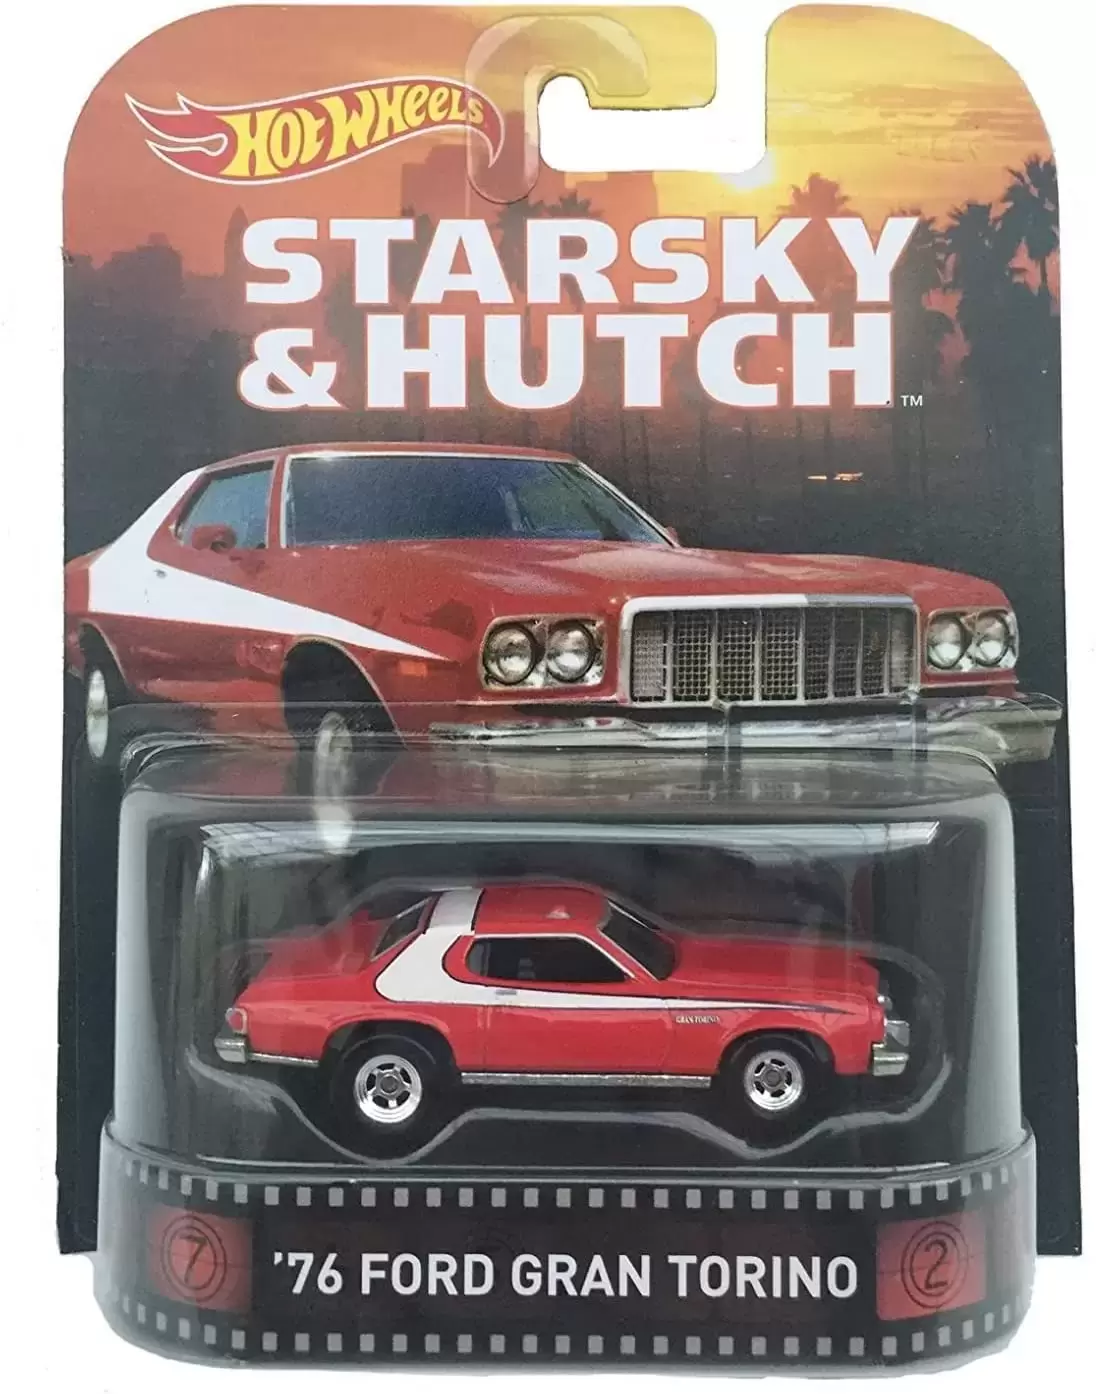 Retro Entertainment Hot Wheels - Starsky & Hutch - 76 Ford Gran Torino